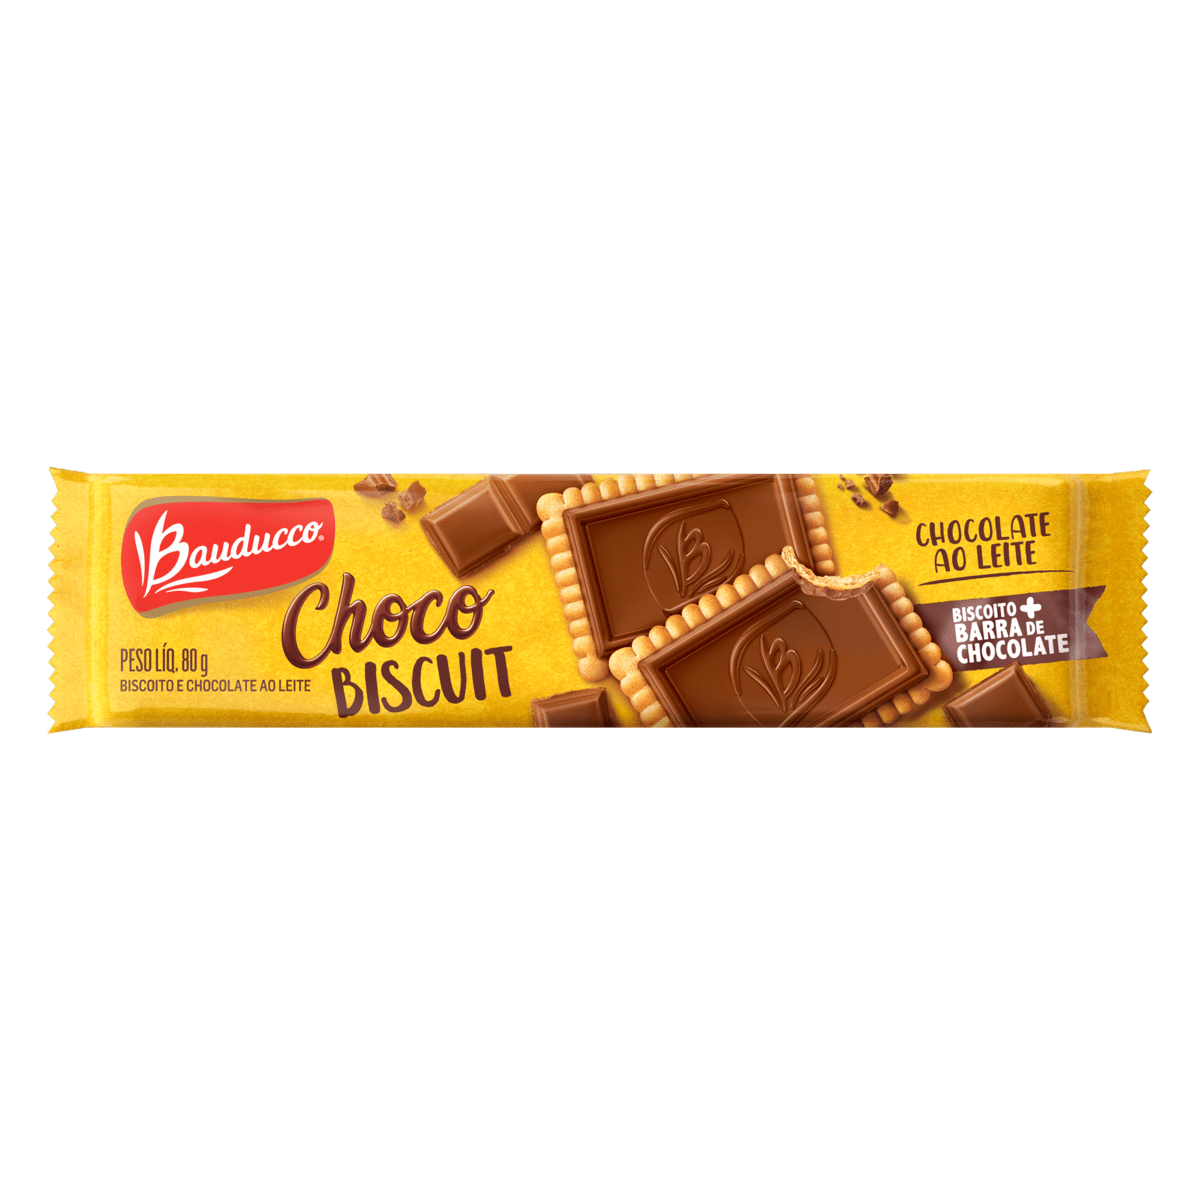 Biscoito-Chocolate-ao-Leite-Bauducco-Choco-Biscuit-Pacote-80g